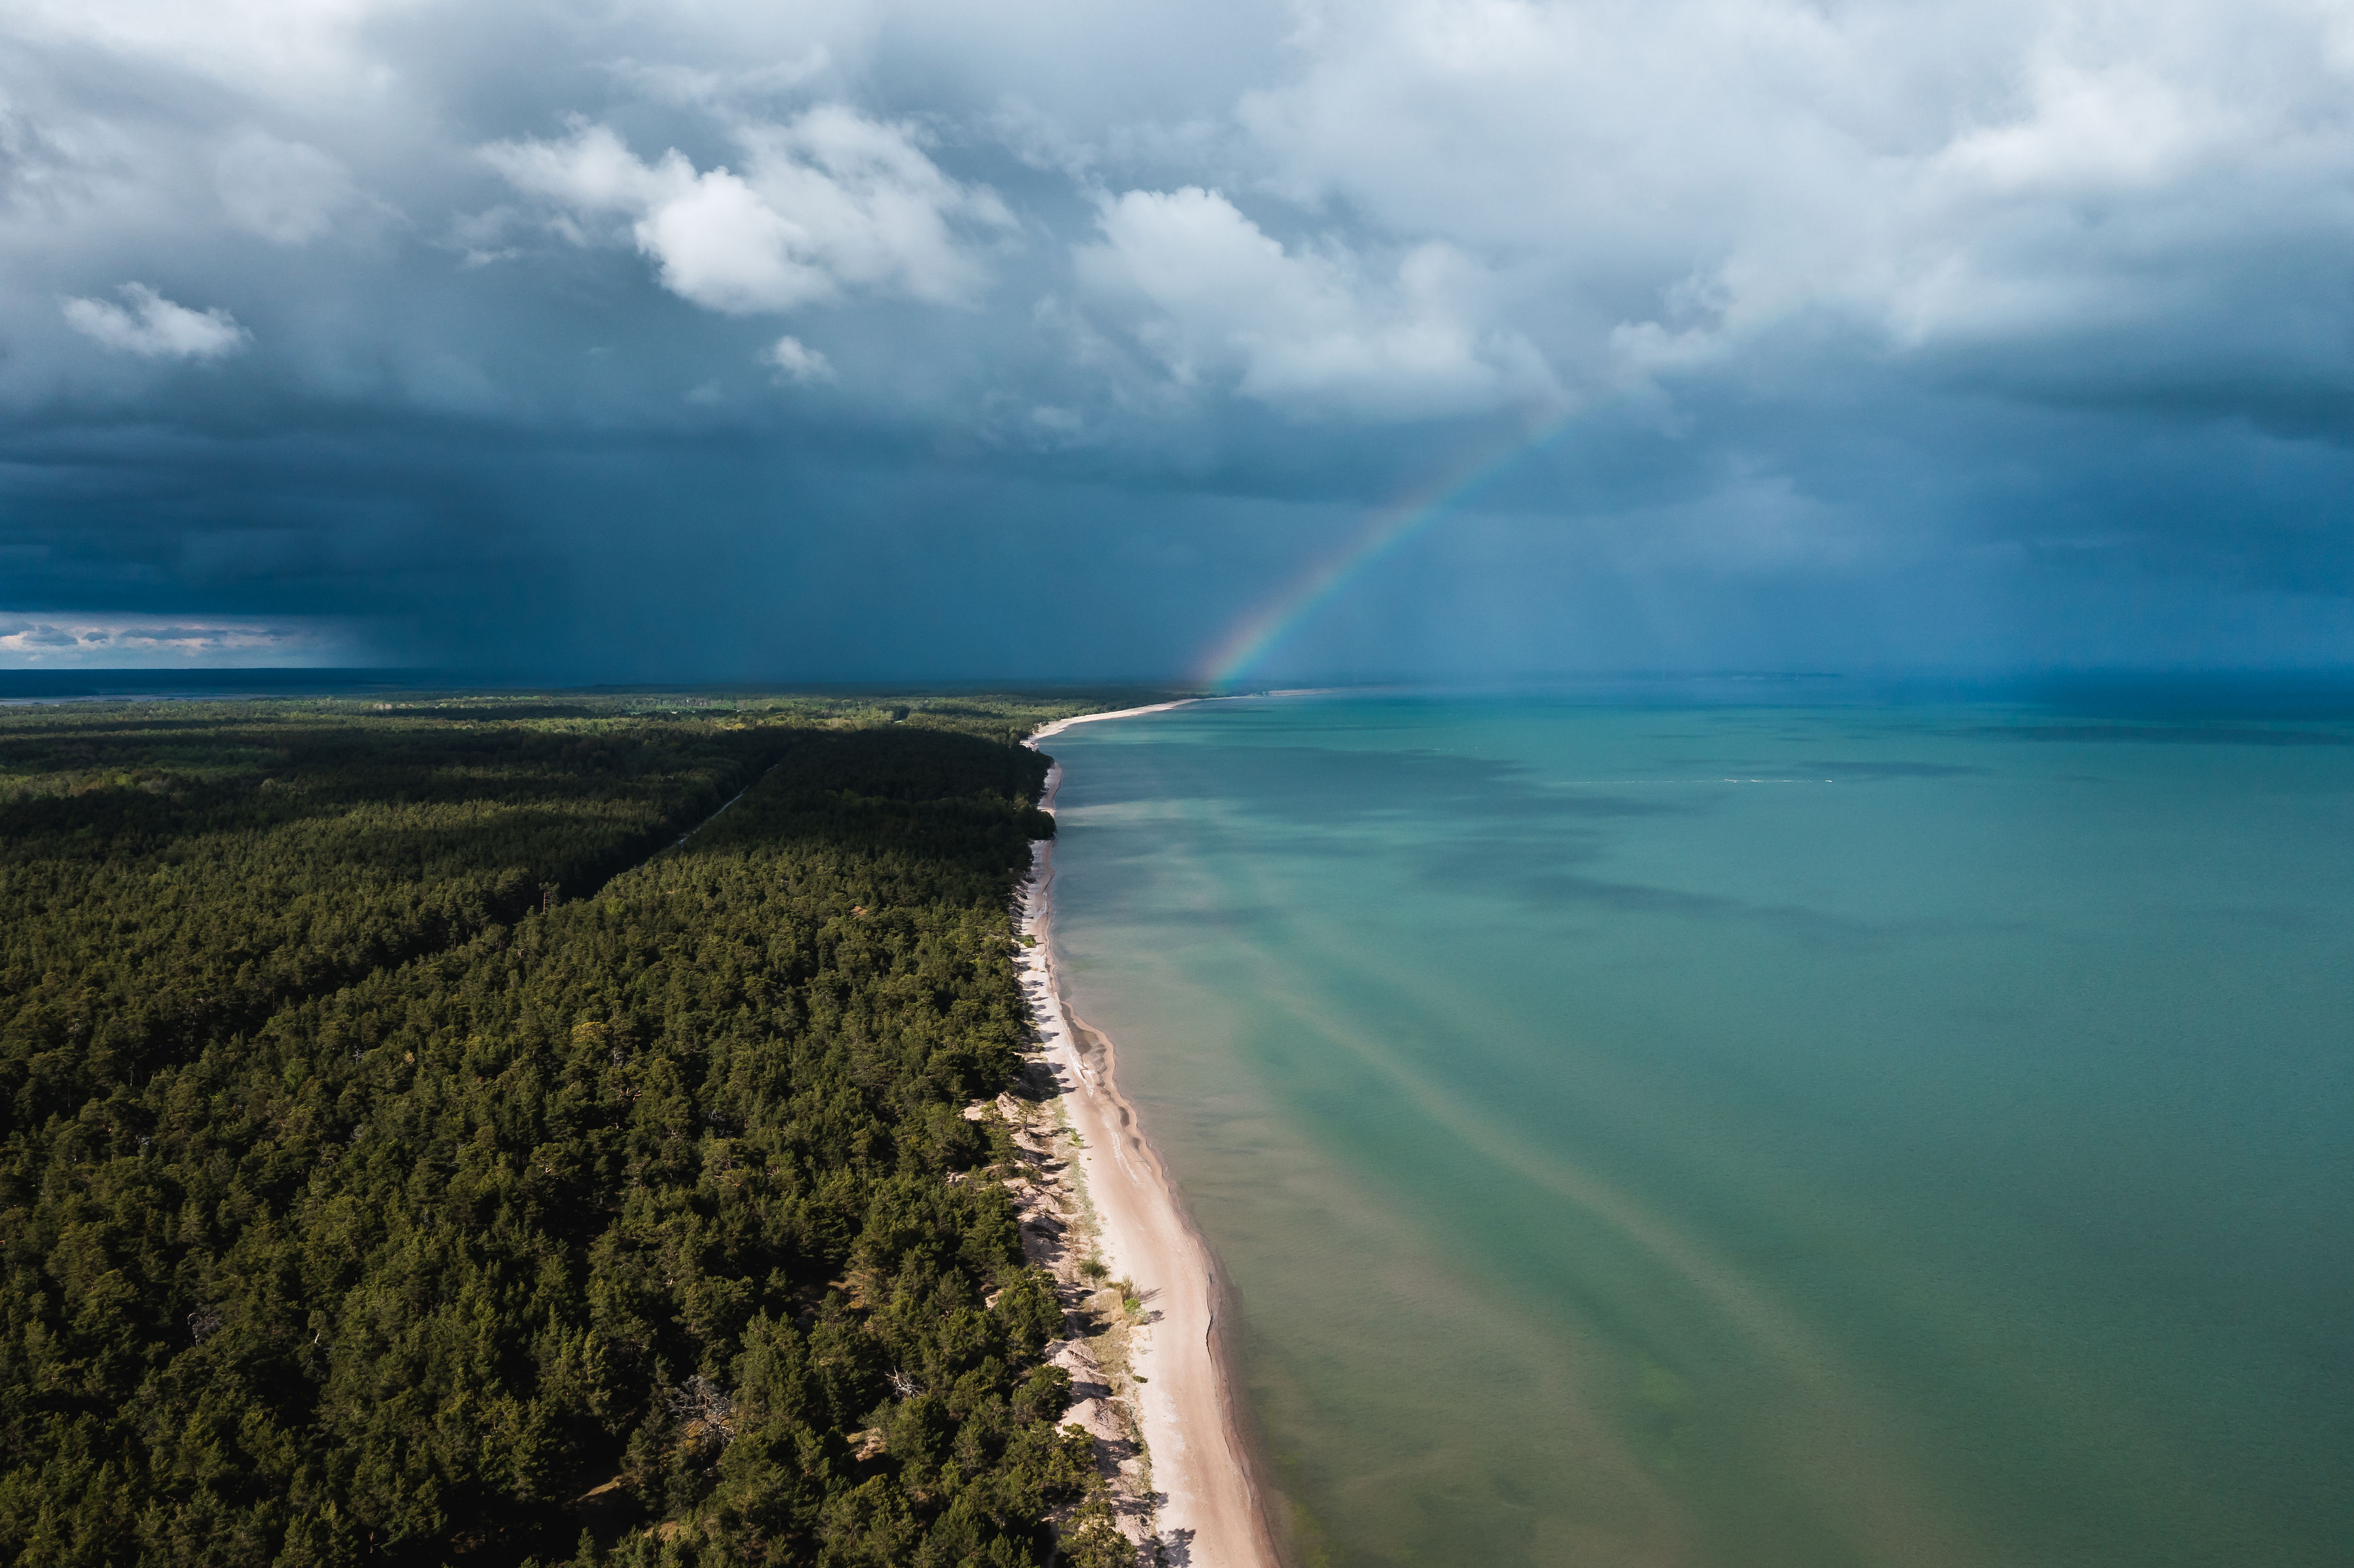 Rainbow over long sandy beach in Estonia